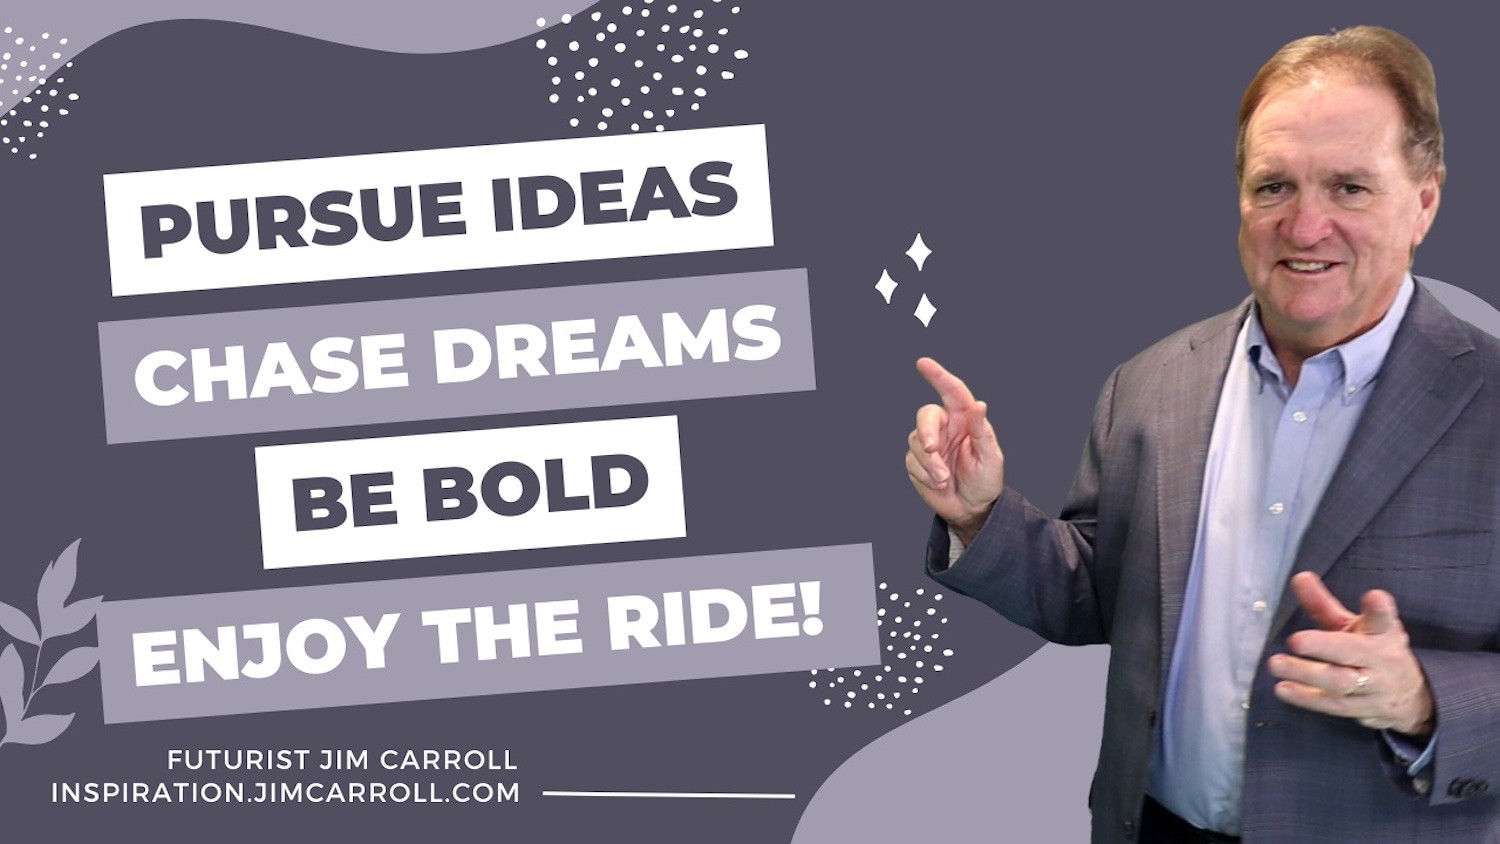 "Pursue ideas. Chase dreams. Be bold. Enjoy the ride!" - Futurist Jim Carroll